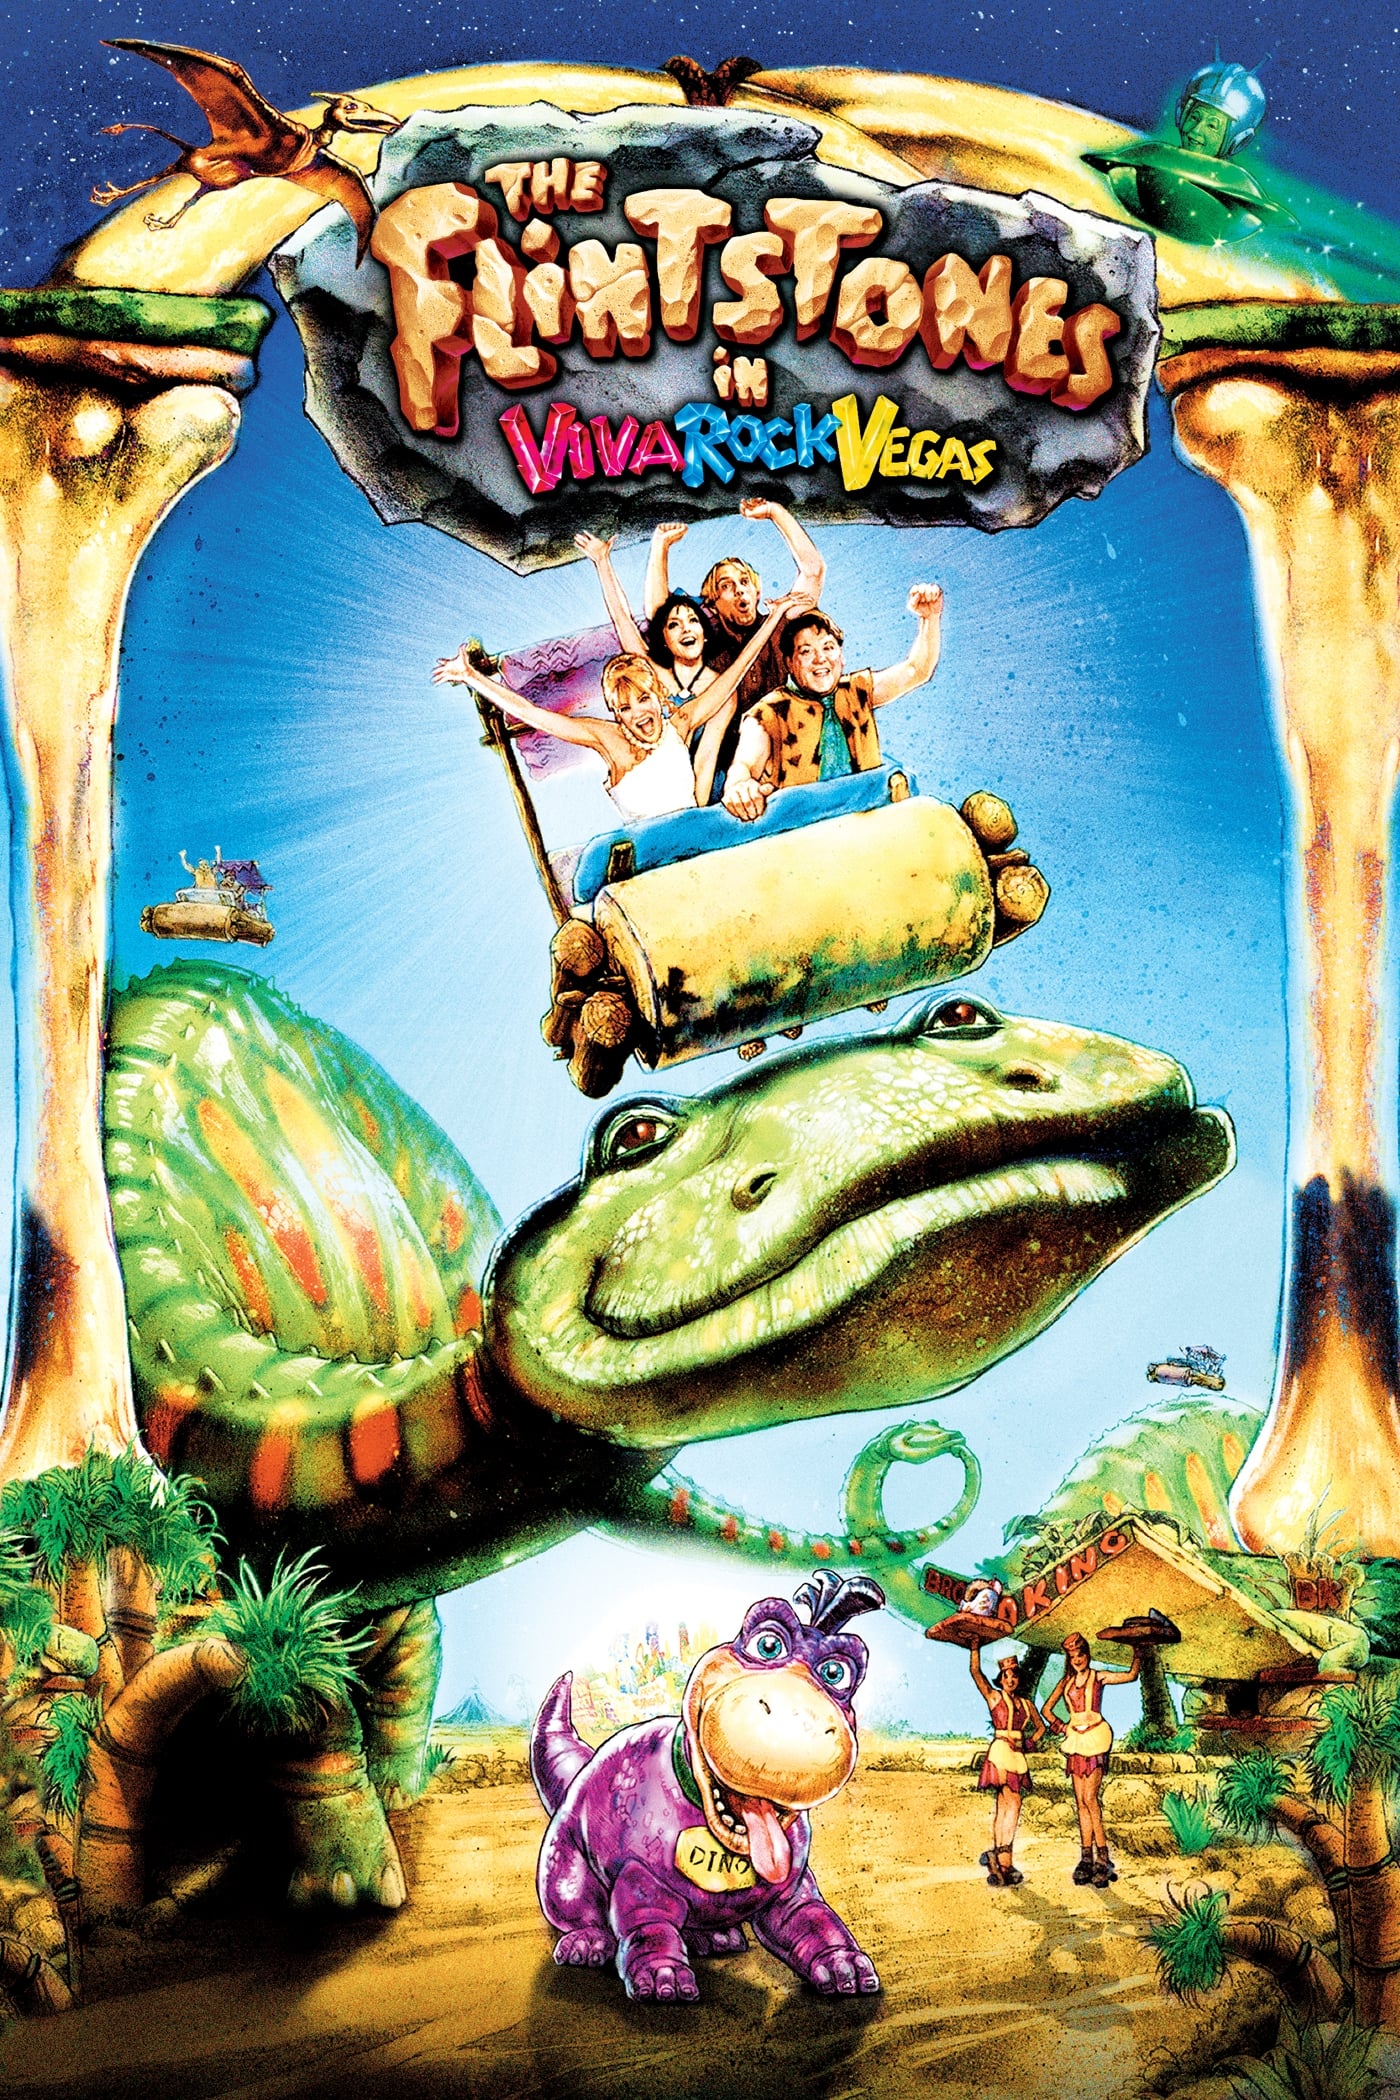 Gia Đình Flintstones ở Viva Rock Vegas (The Flintstones in Viva Rock Vegas) [2000]